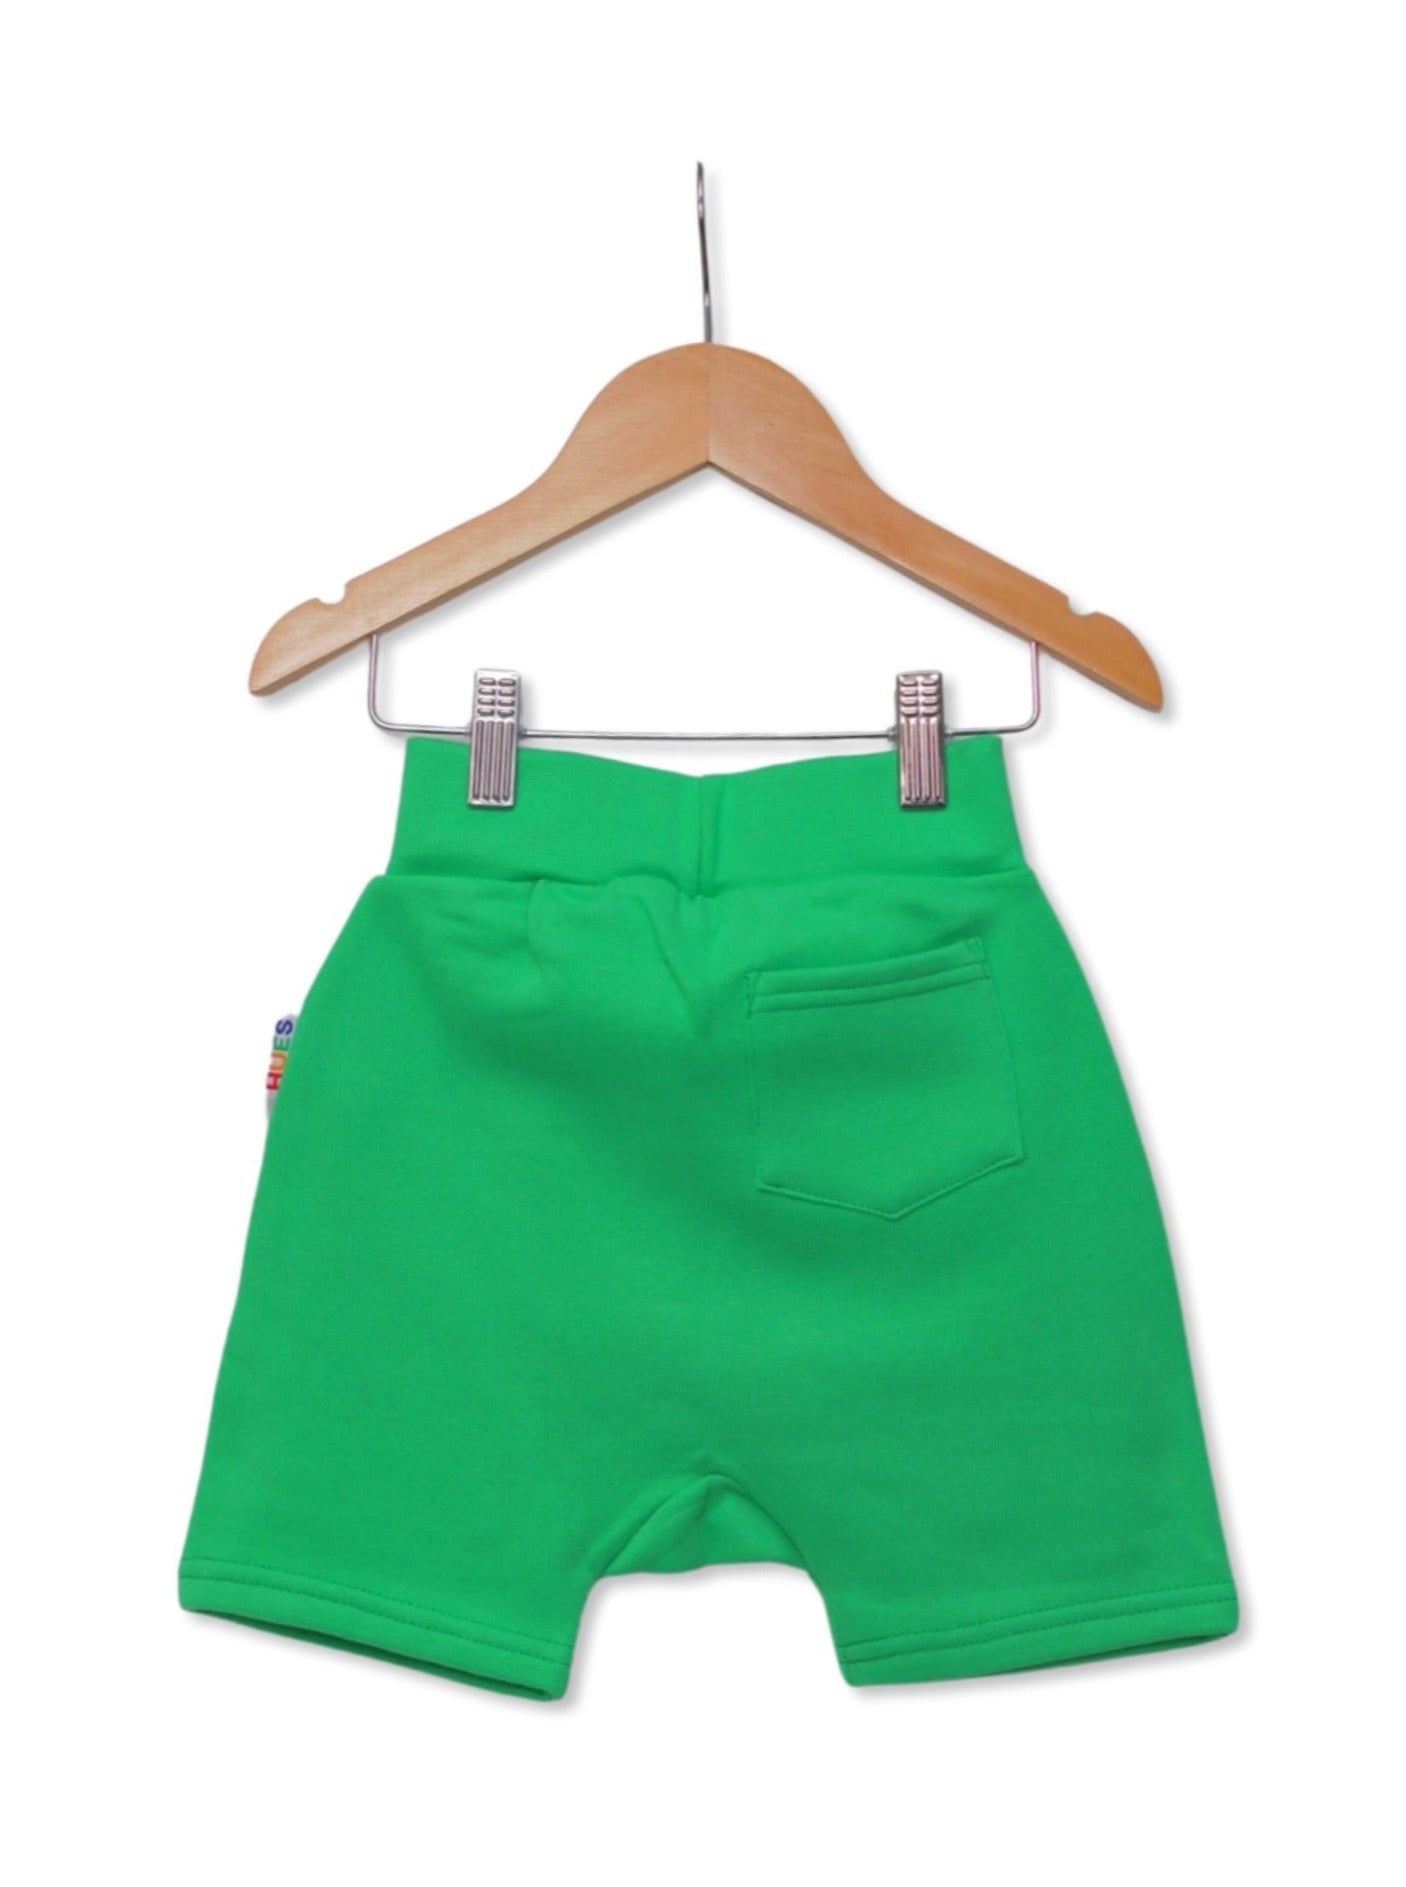 Kids Unisex Green Shorts Back View - Hues Clothing